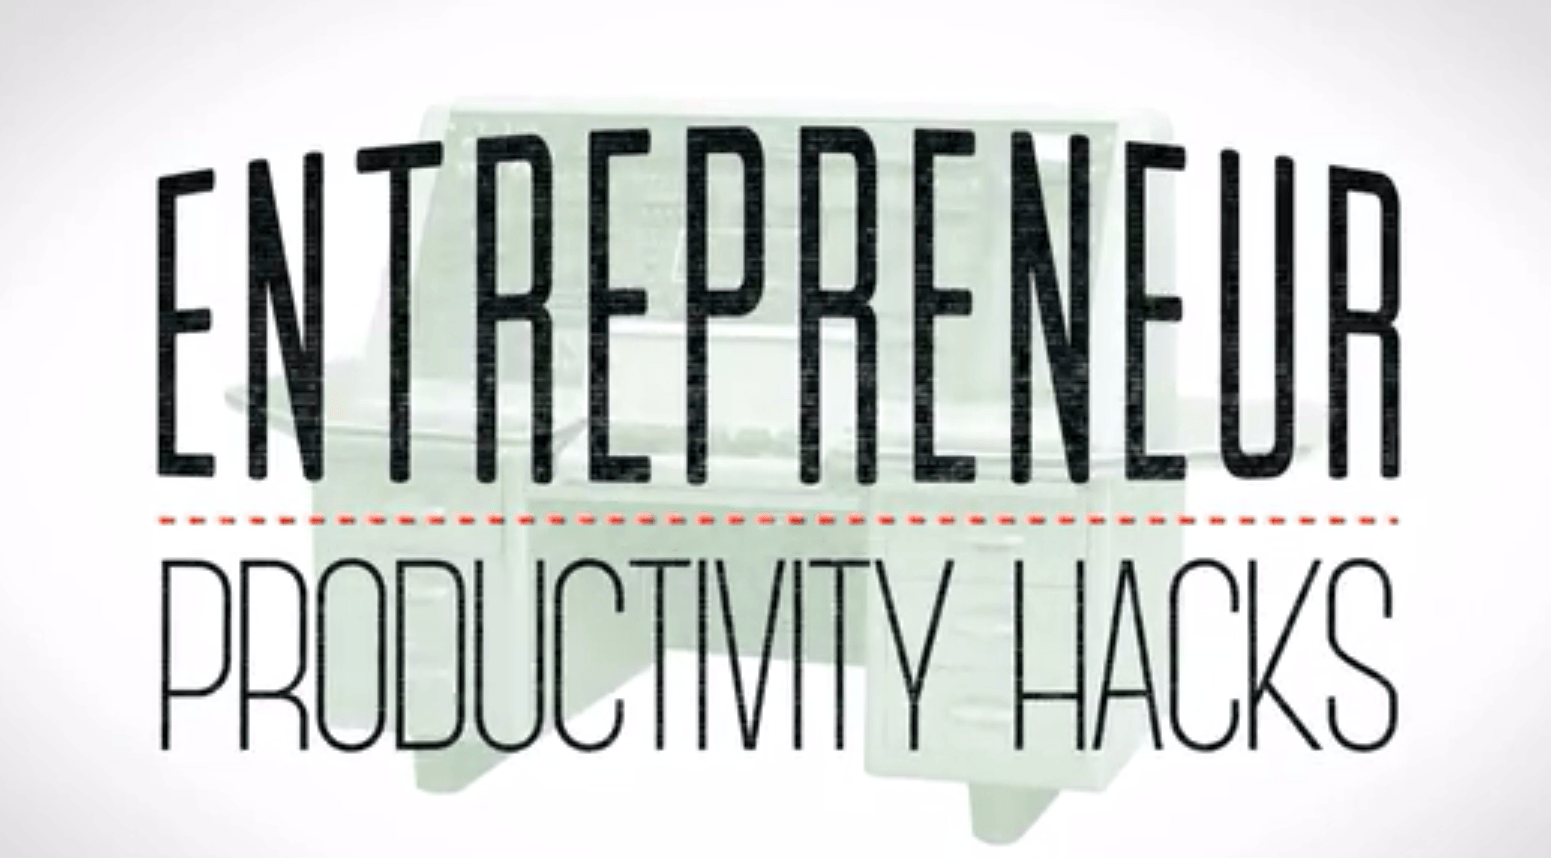 Entrepreneur Productivity Hacks – Joel Widmer